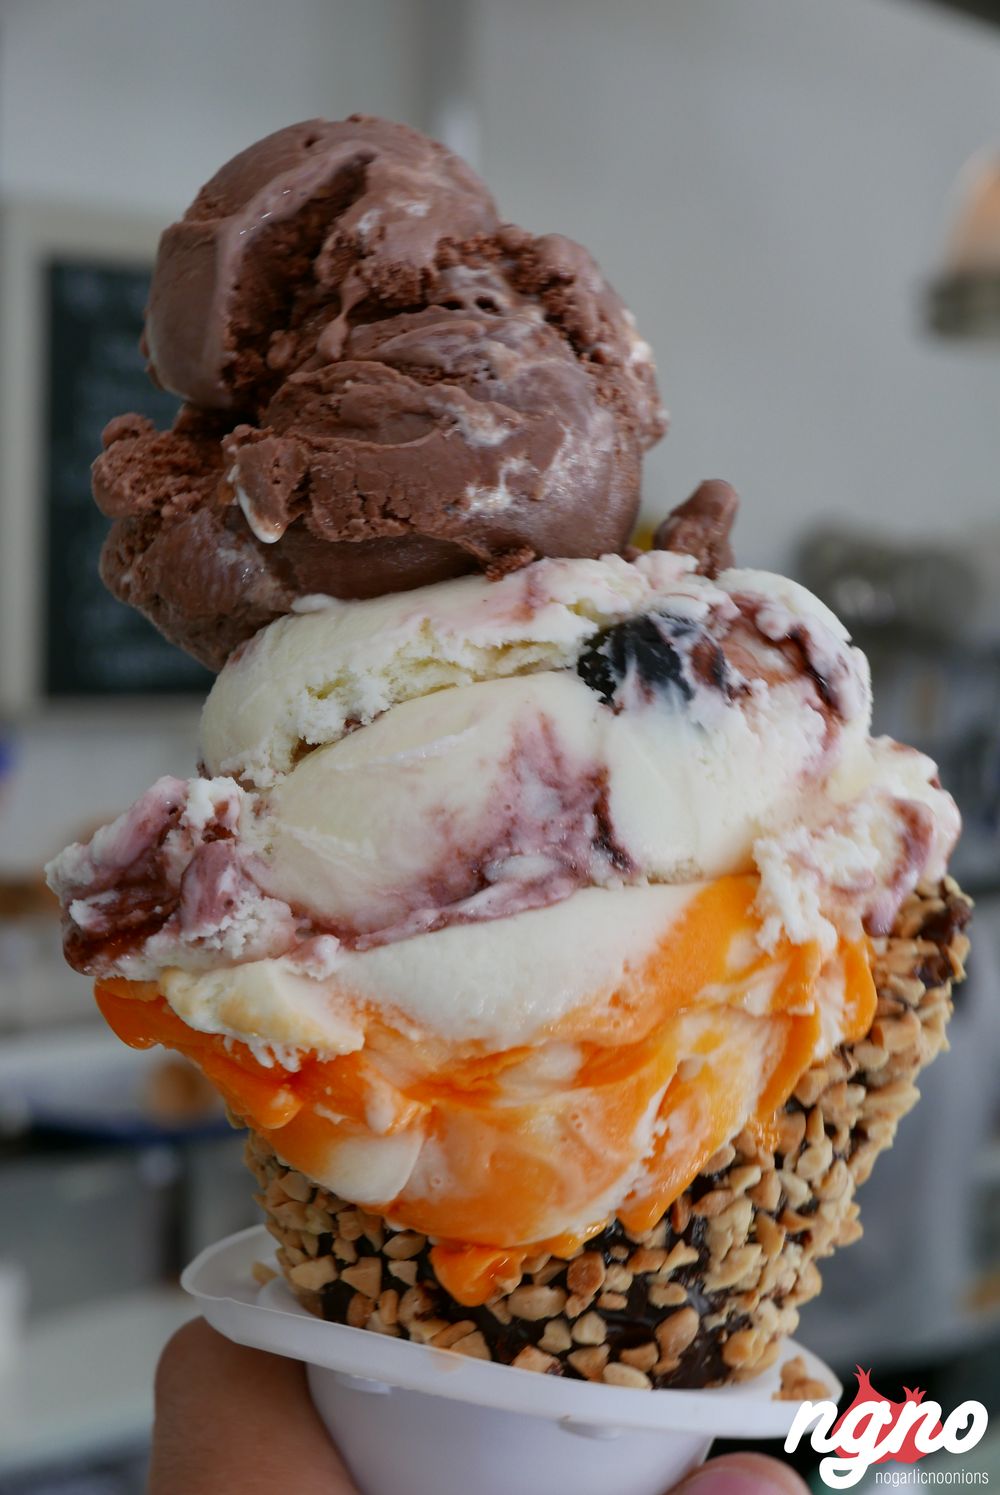 sundaes-cones-ice-cream-new-york92017-04-20-12-54-50